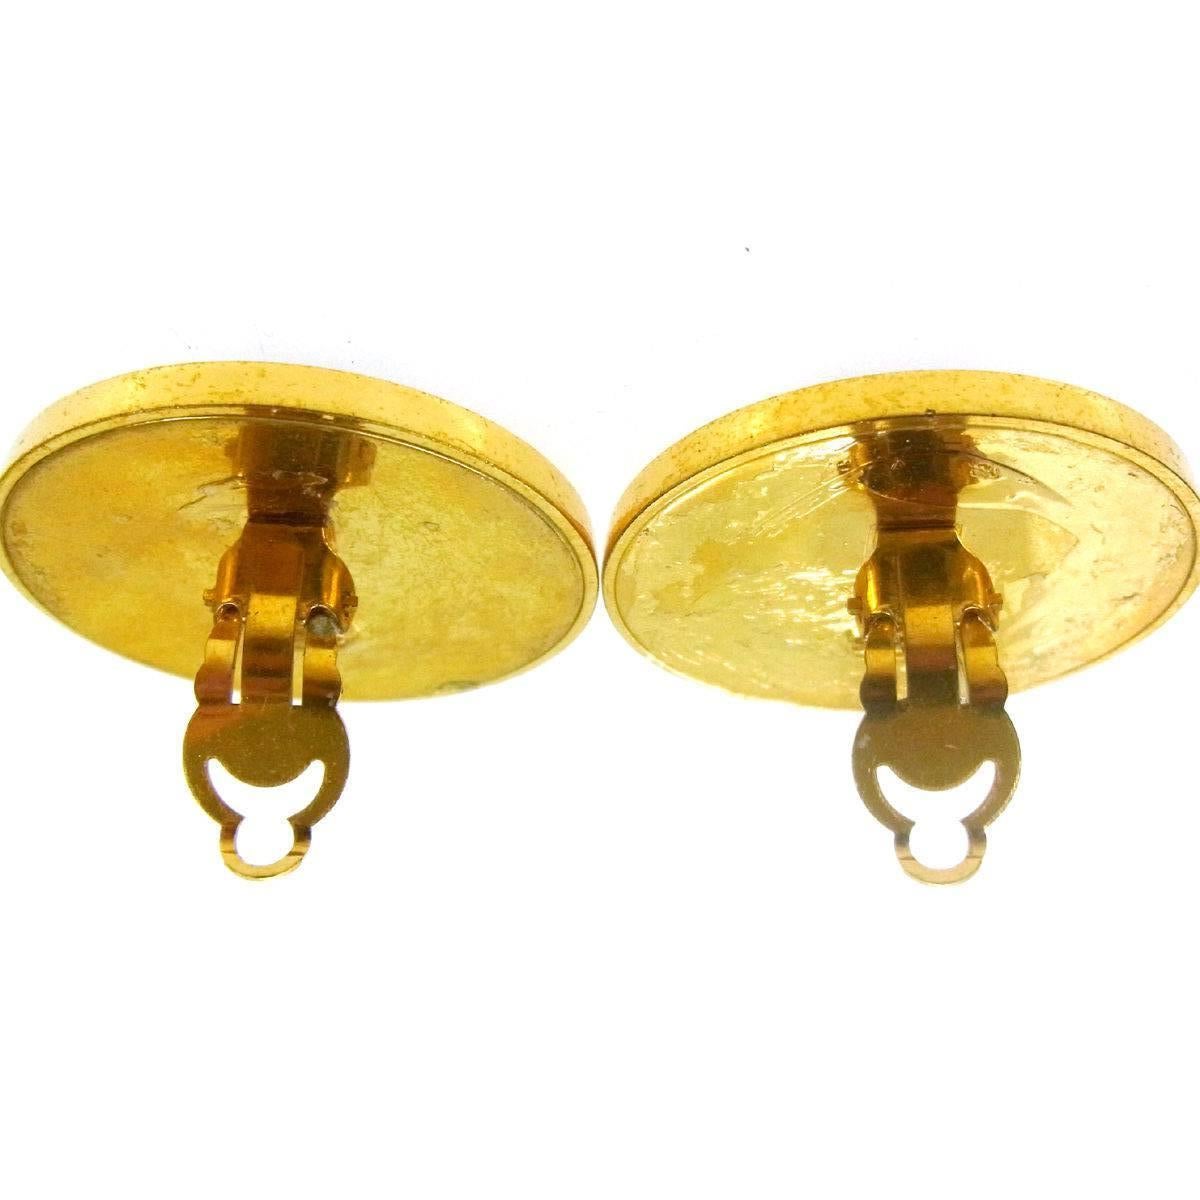 gold disc stud earrings